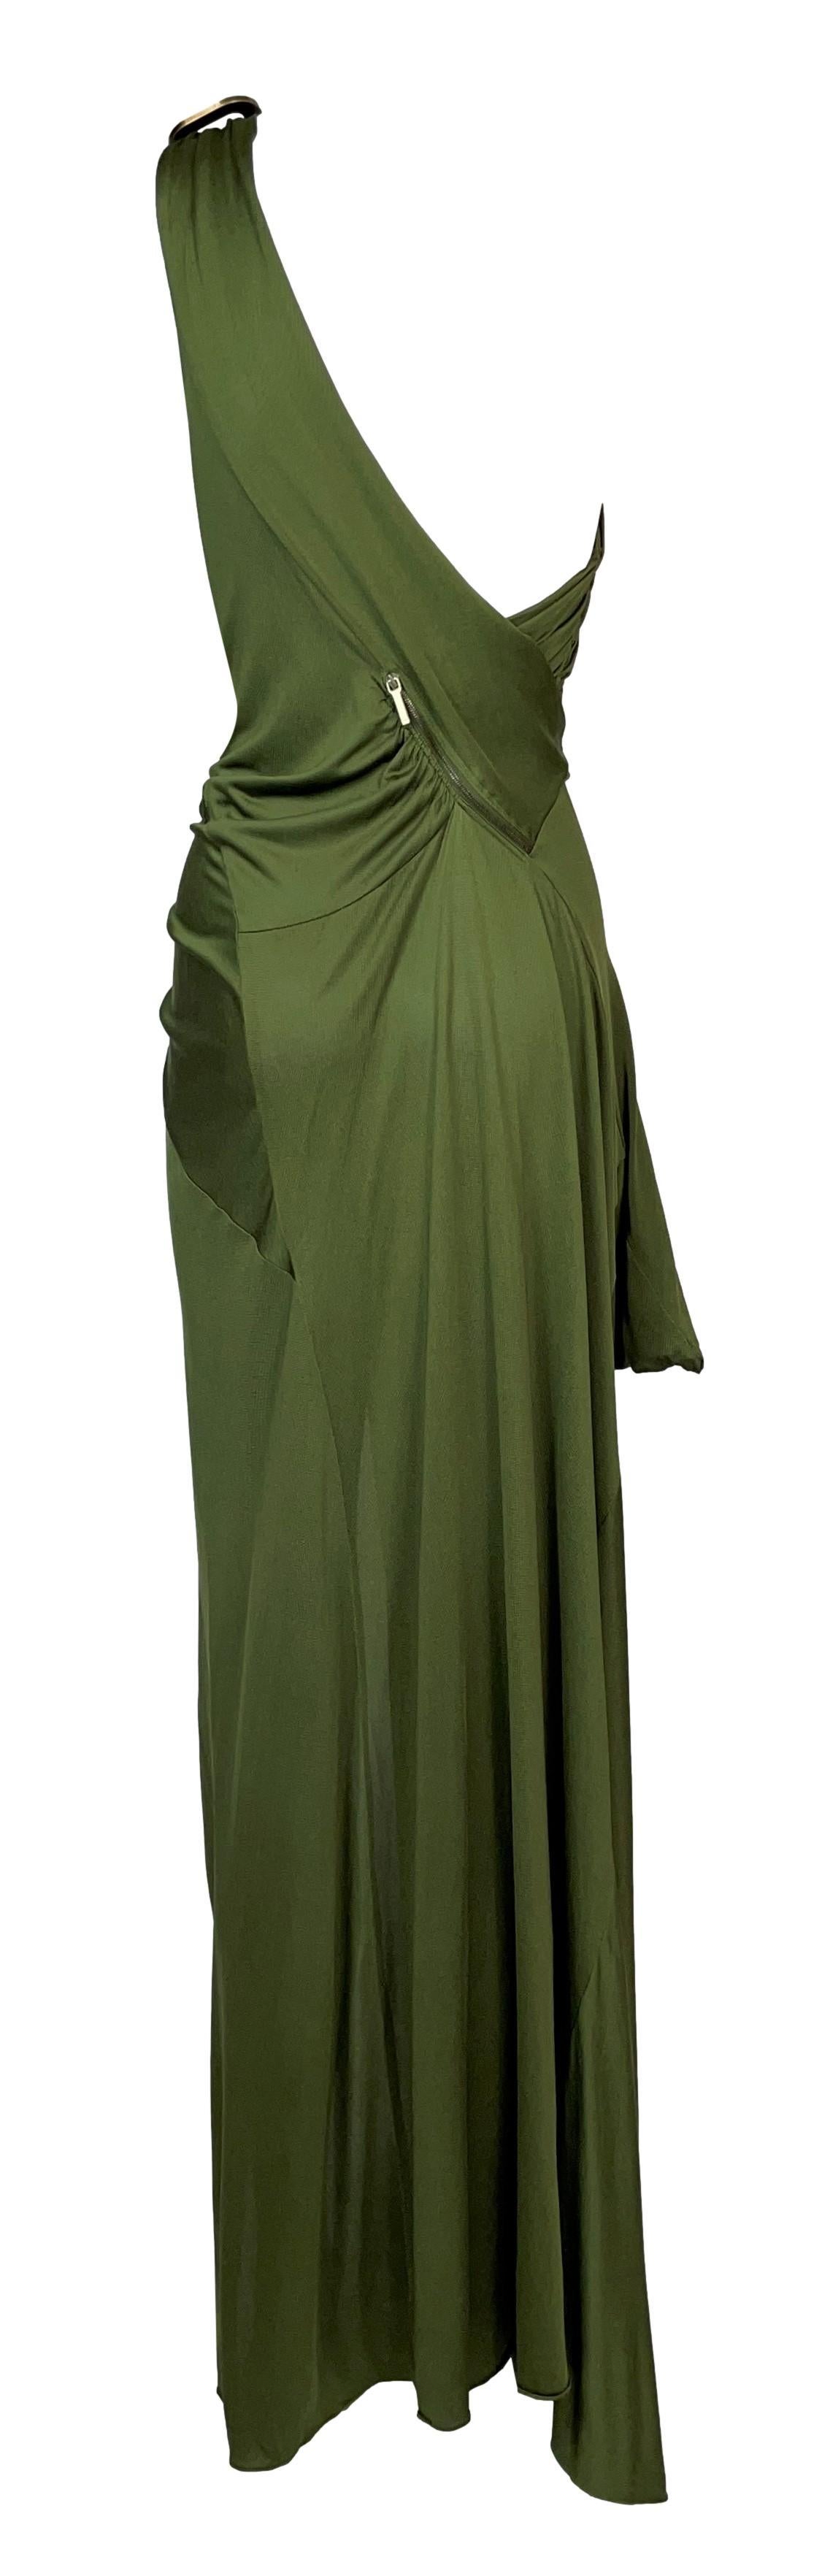 S/S 2002 Christian Dior John Galliano Runway Green High Slit Maxi Dress In Good Condition In Yukon, OK